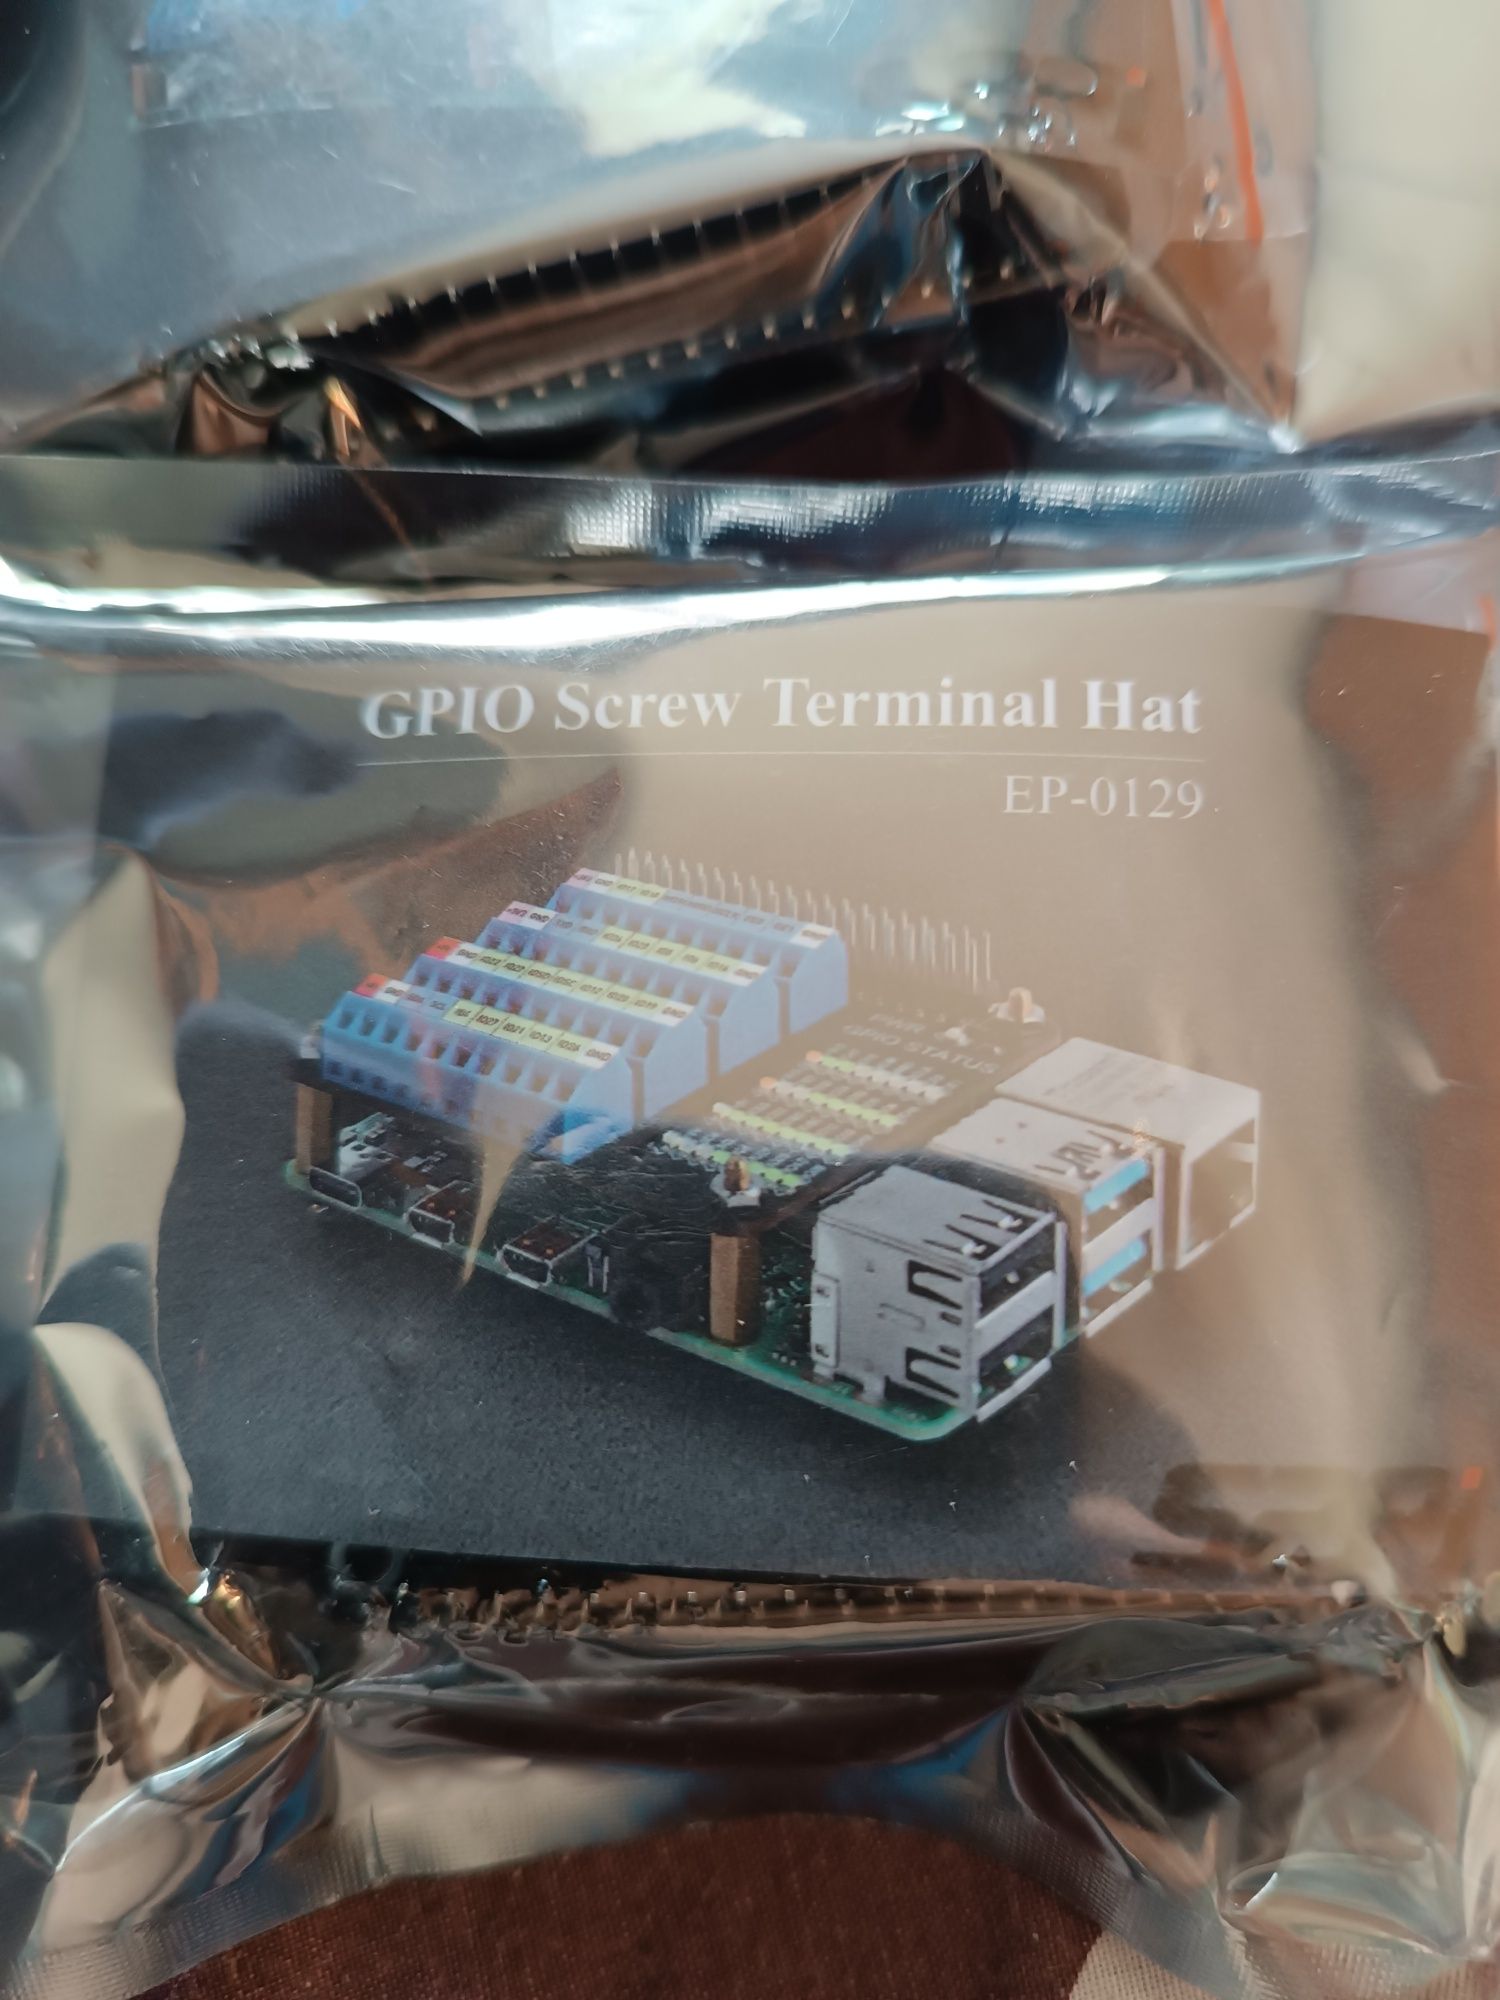 GPIO screw terminal hat ep 0129